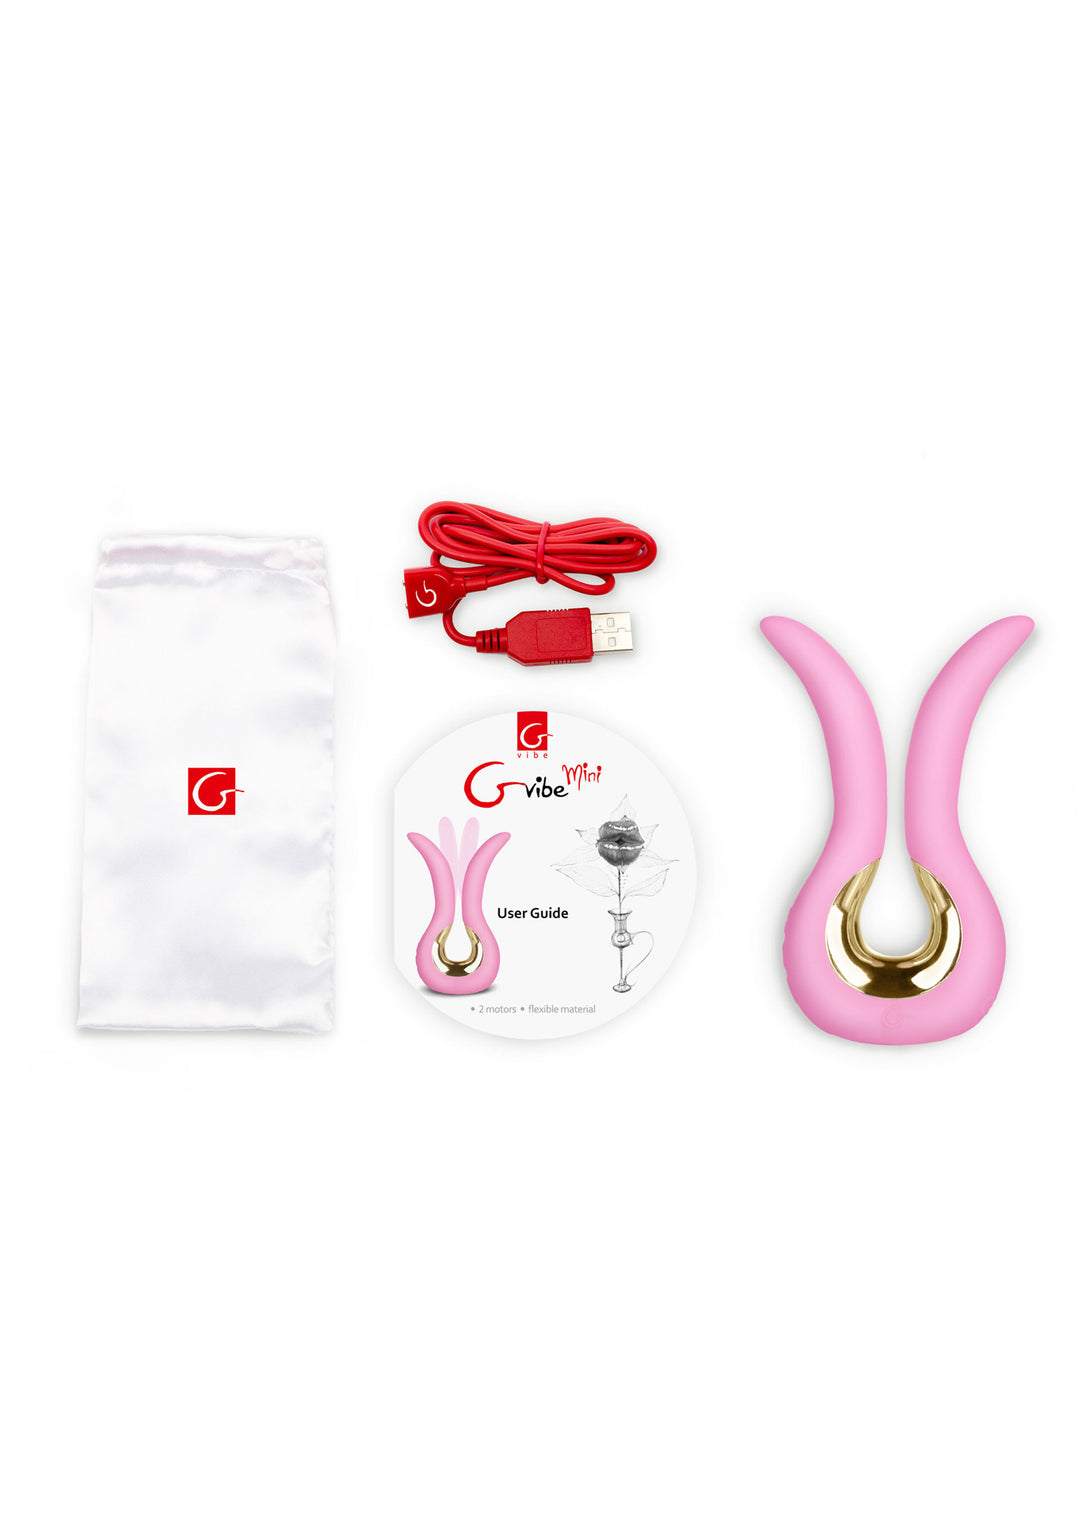 Gvibe Mini double silicone vaginal vibrator for G-spot and clitoris